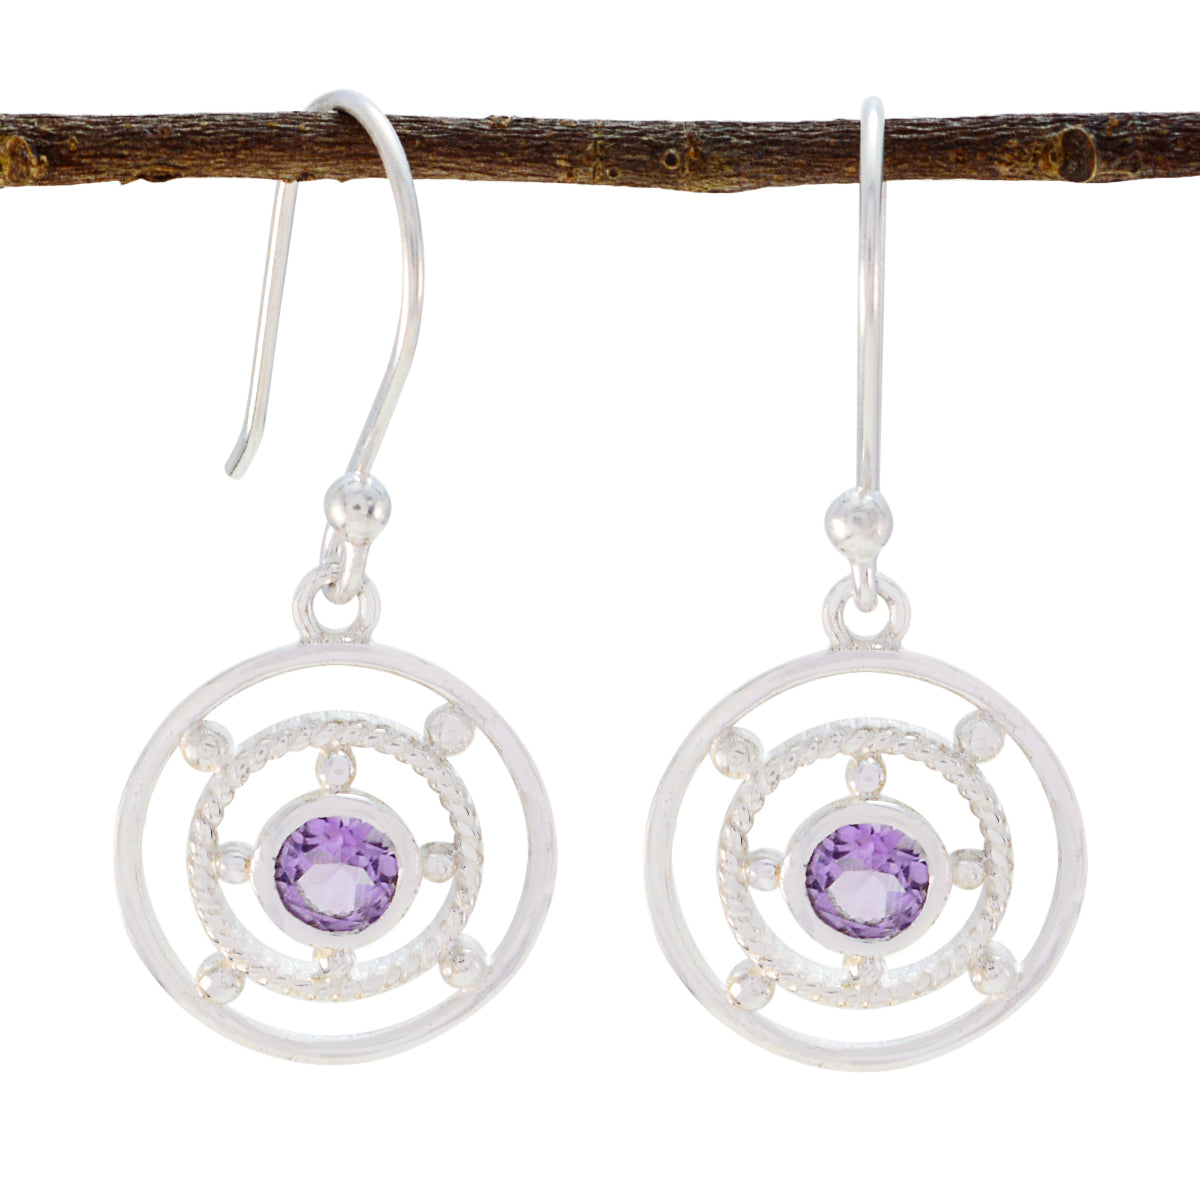 Riyo Nice Gemstone round Faceted Purple Amethyst Silver Earrings gift for brithday